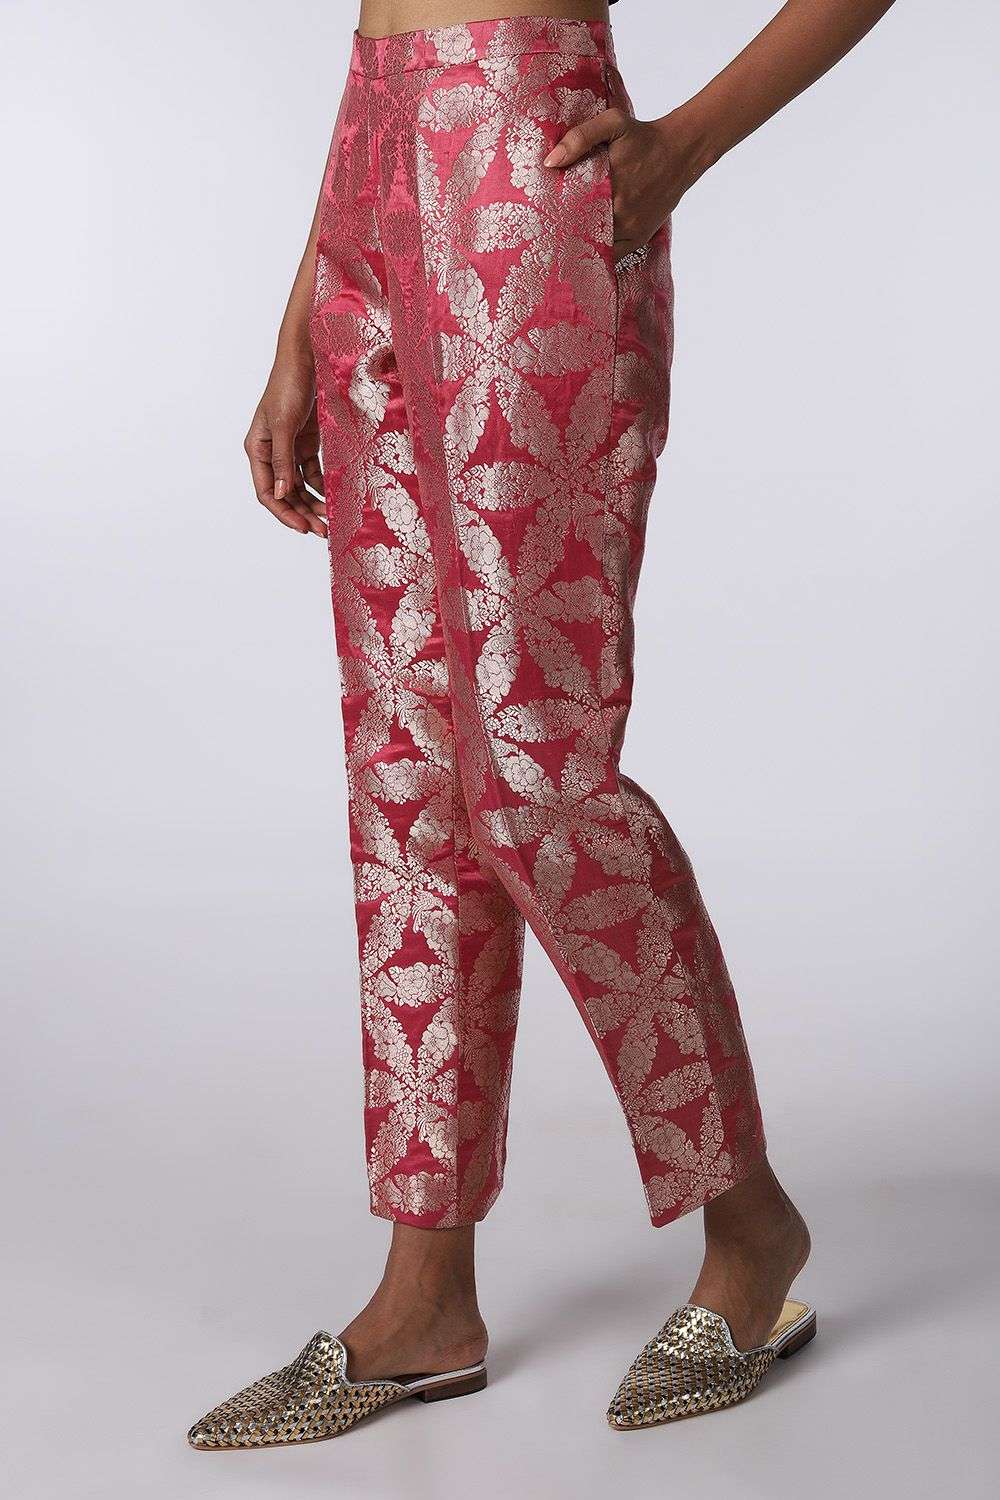 Buy Gajra Gang Marigold Pink Foil Printed Straight Pant GGBTM08 Online